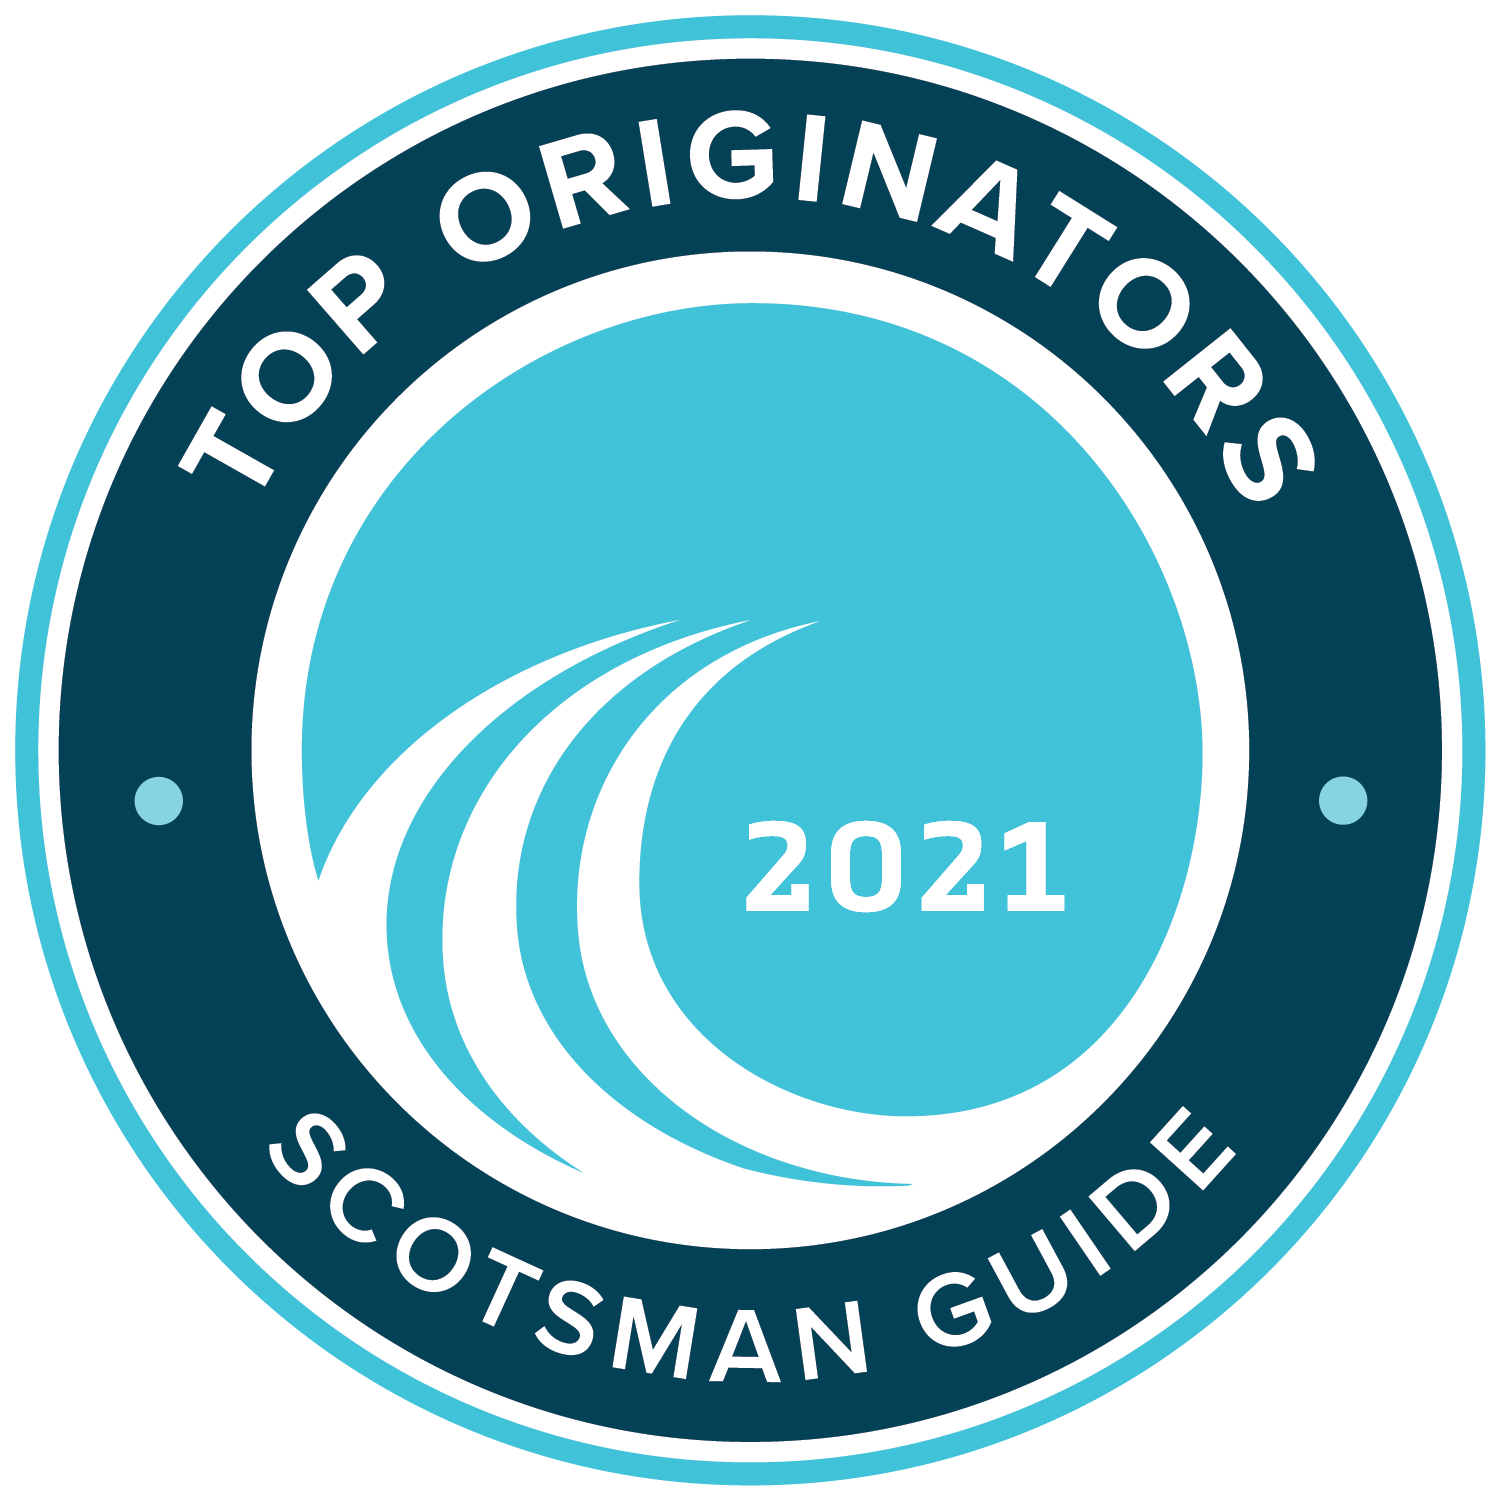 Top Originators - Scotsman Guide